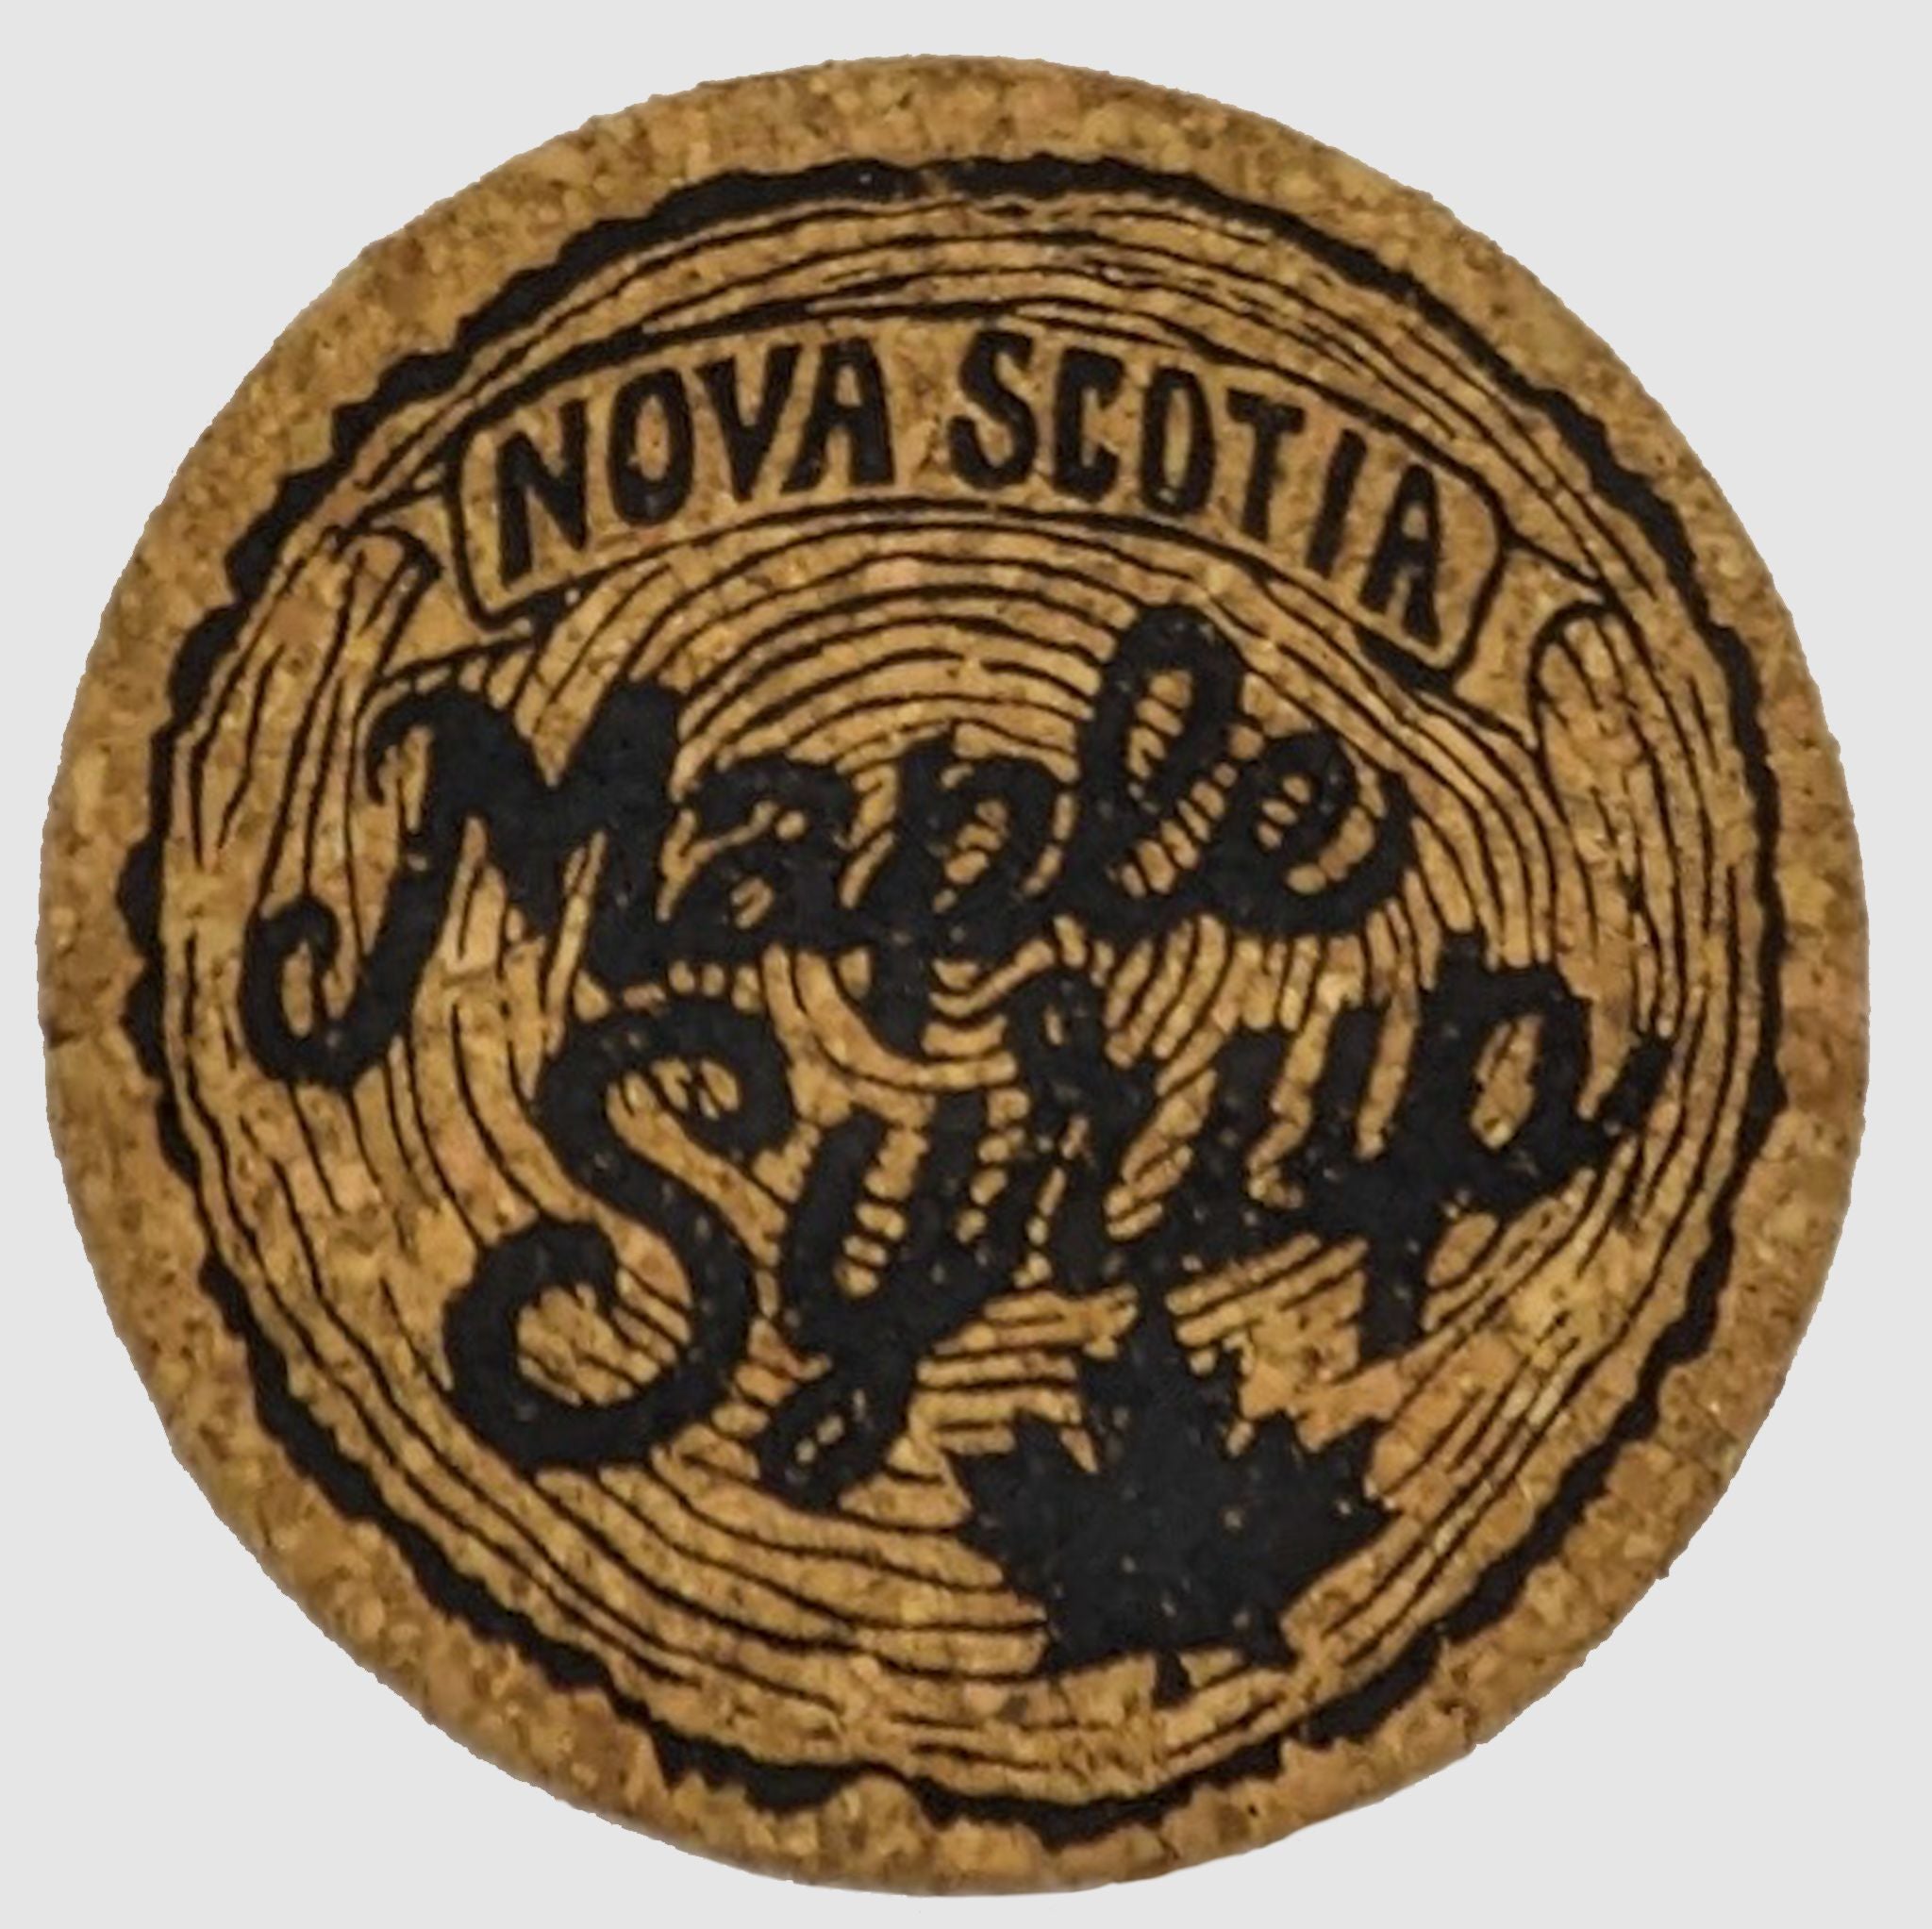 Nova Scotia Maple Syrup